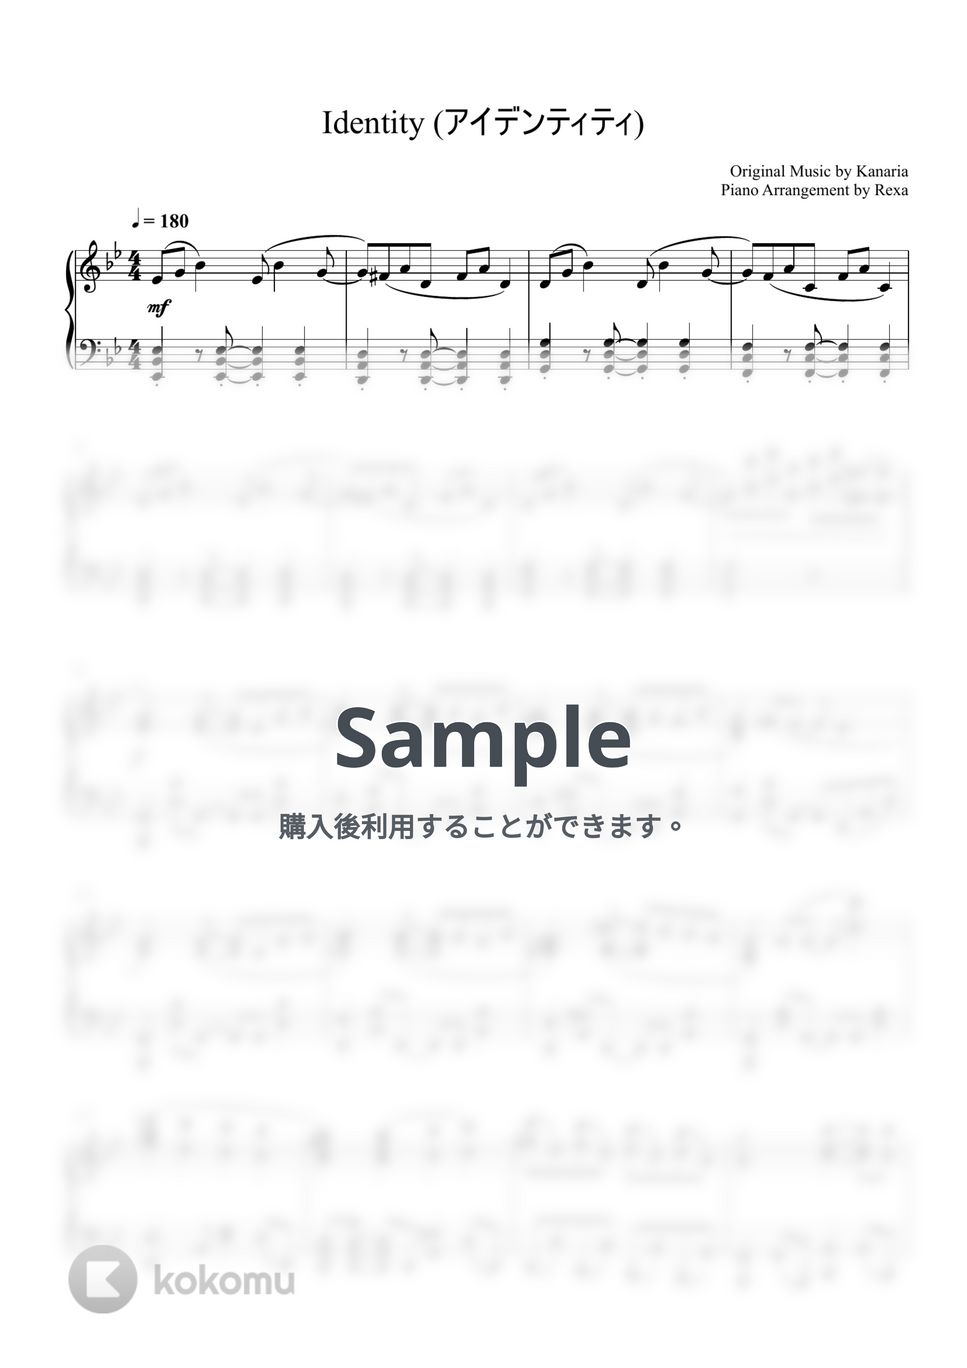 GUMI×初音ミク, Kanaria - アイデンティティ (ピアノ) by Rexa - Pianimusic